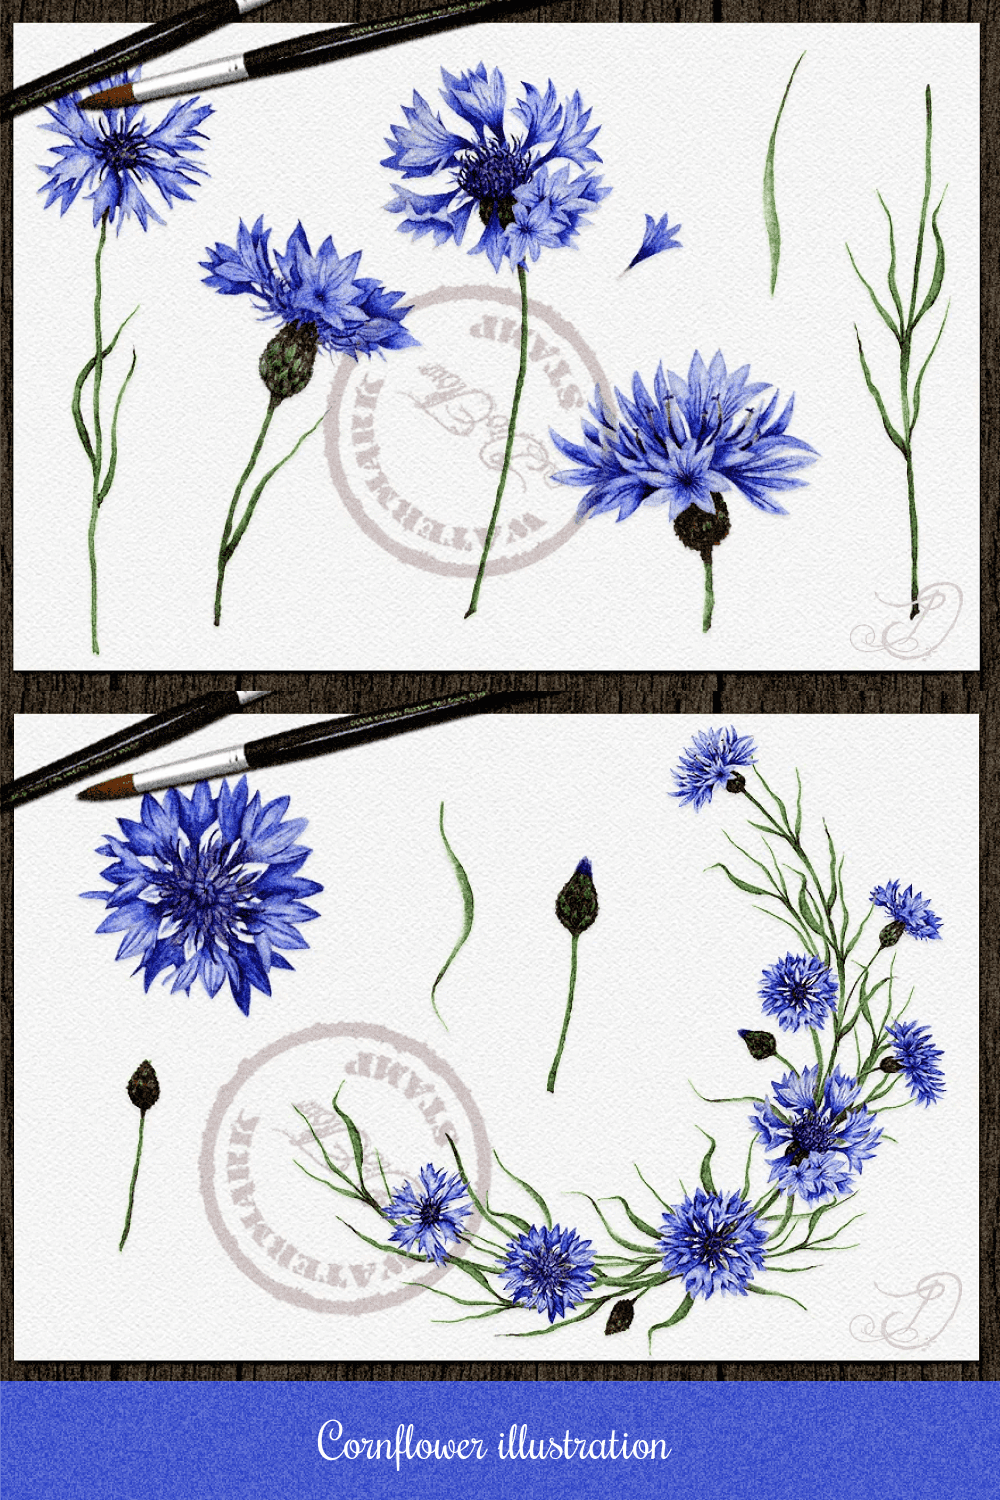 Cornflower illustration - pinterest image preview.